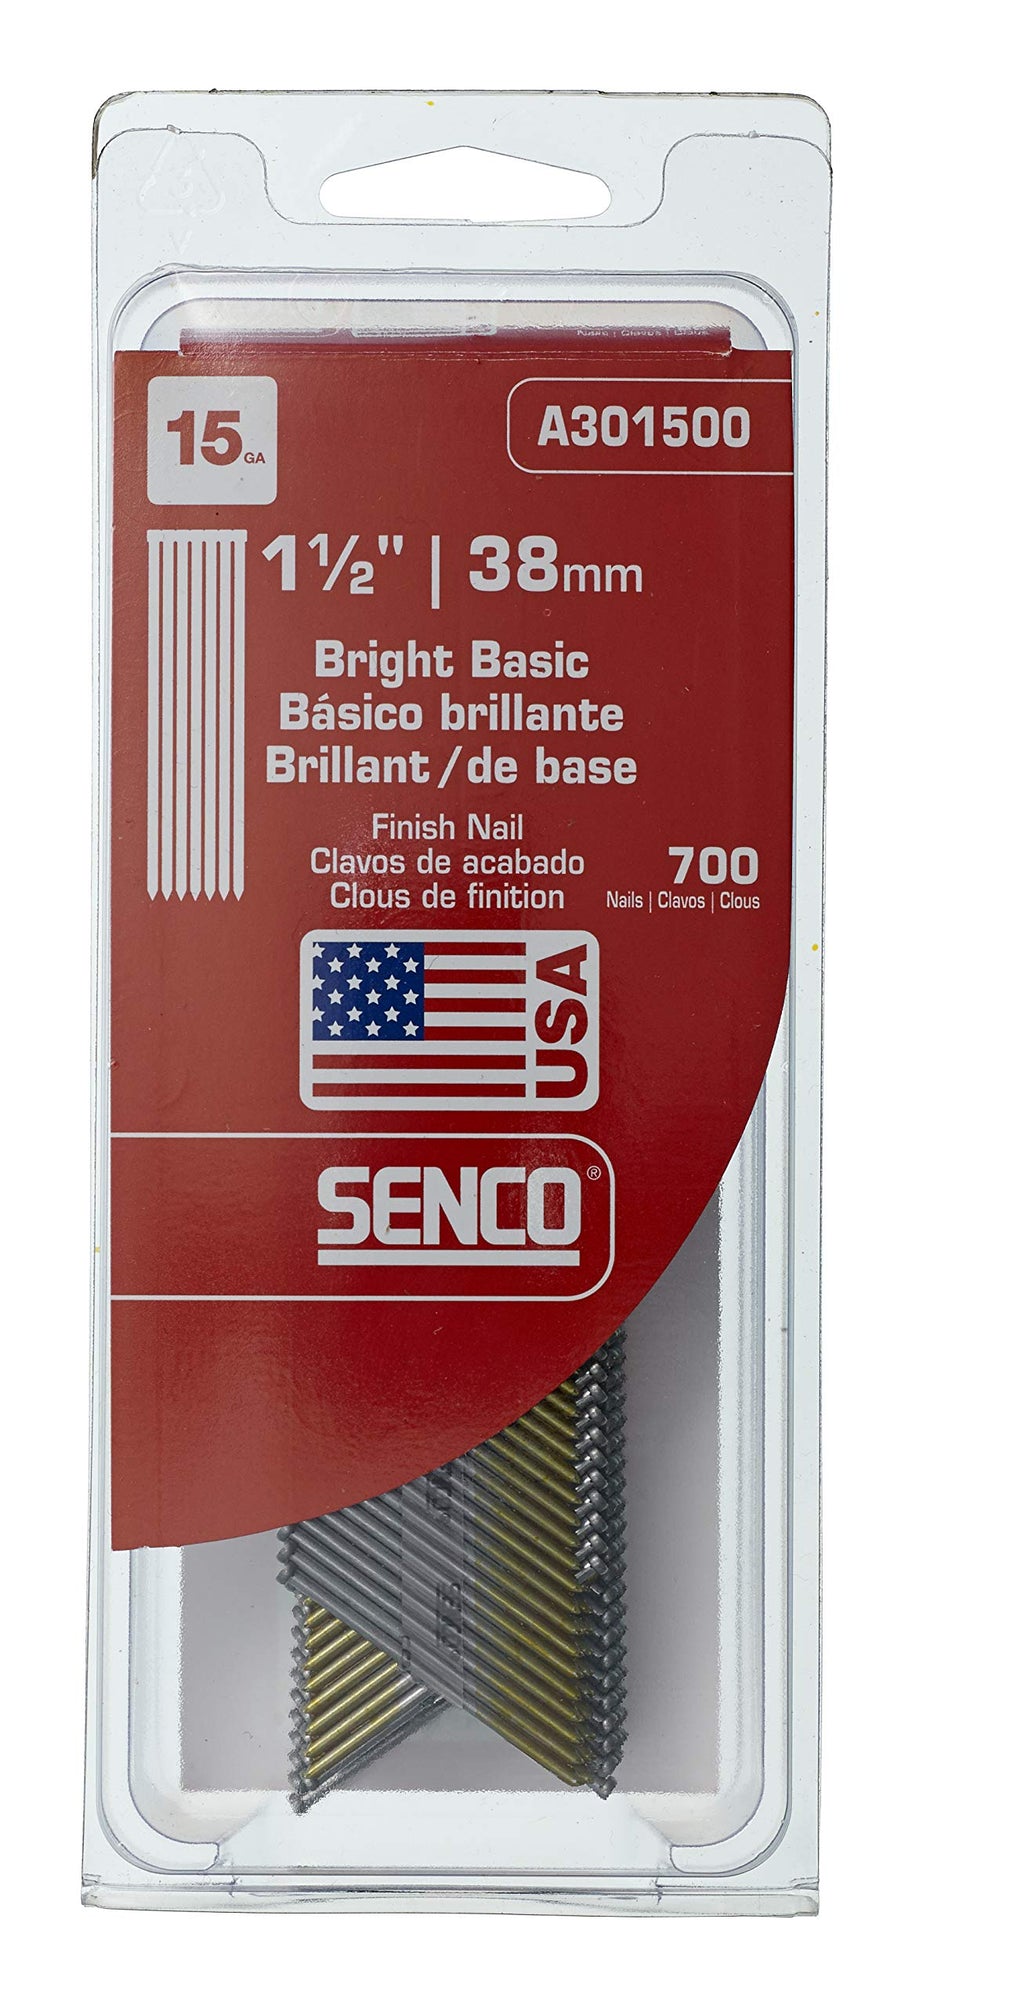 Senco A301500 15-Gauge by 1-1/2-Inch Bright Basic Finish Nails - NewNest Australia